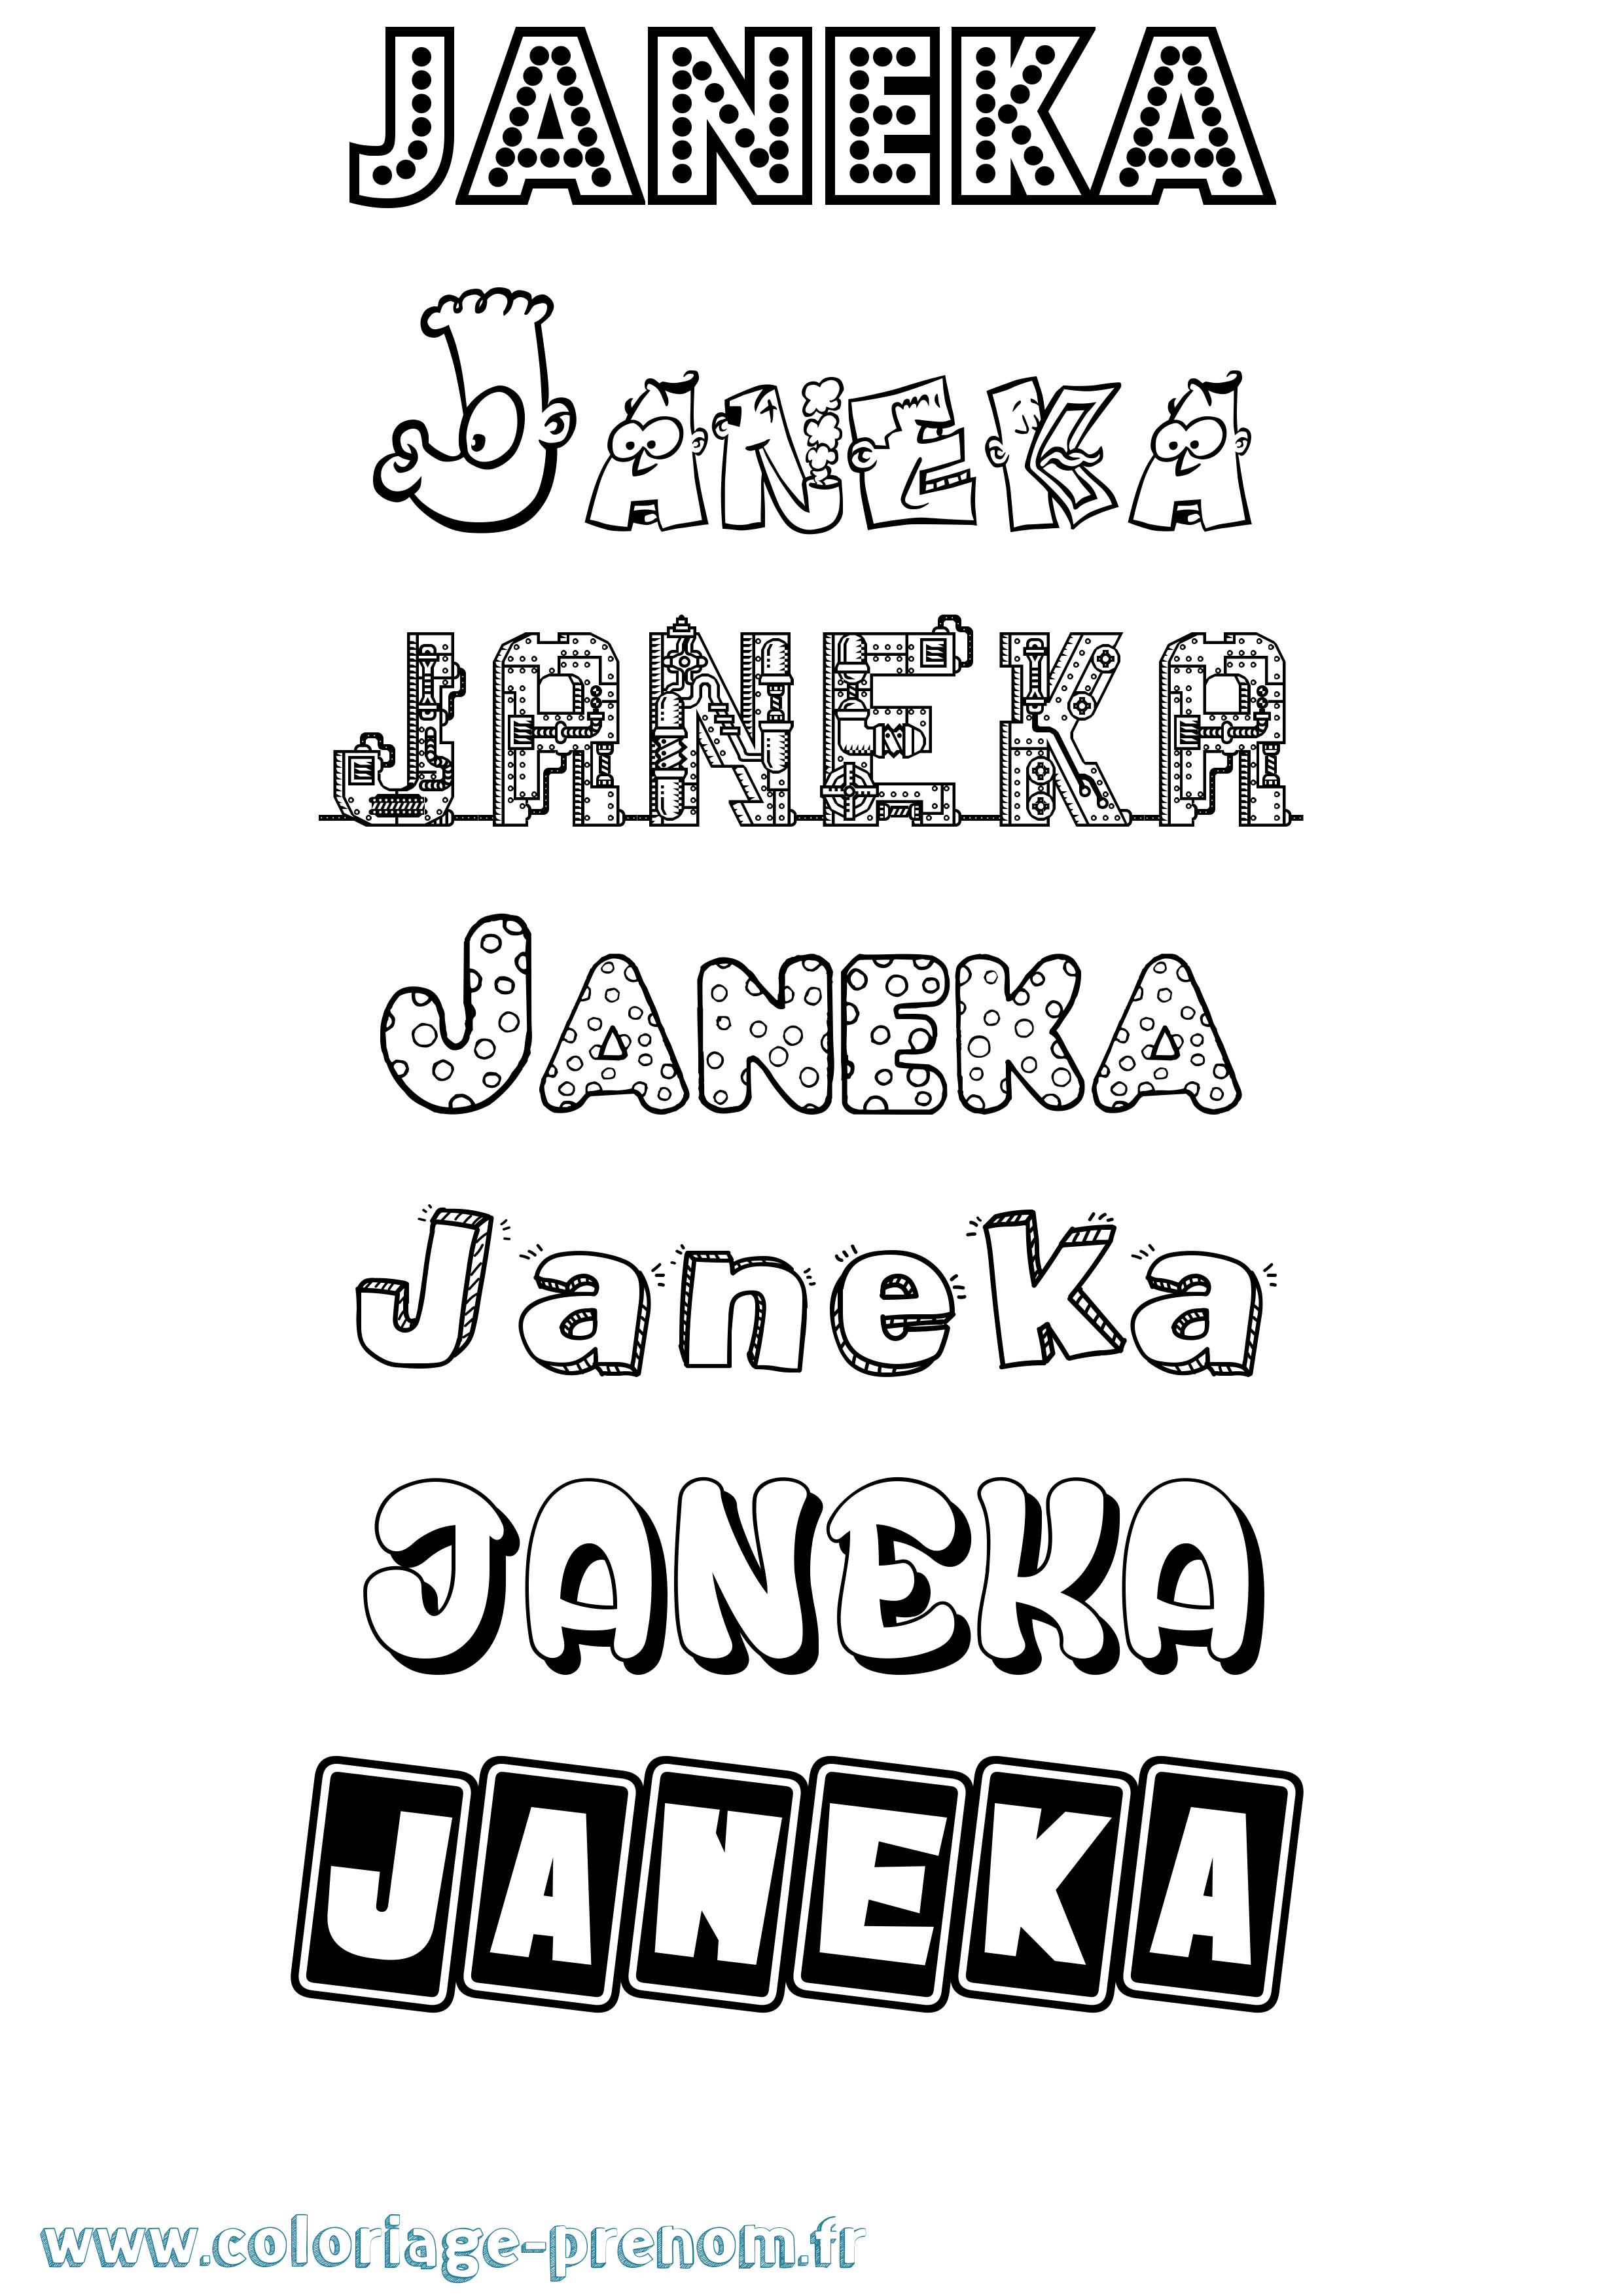 Coloriage prénom Janeka Fun